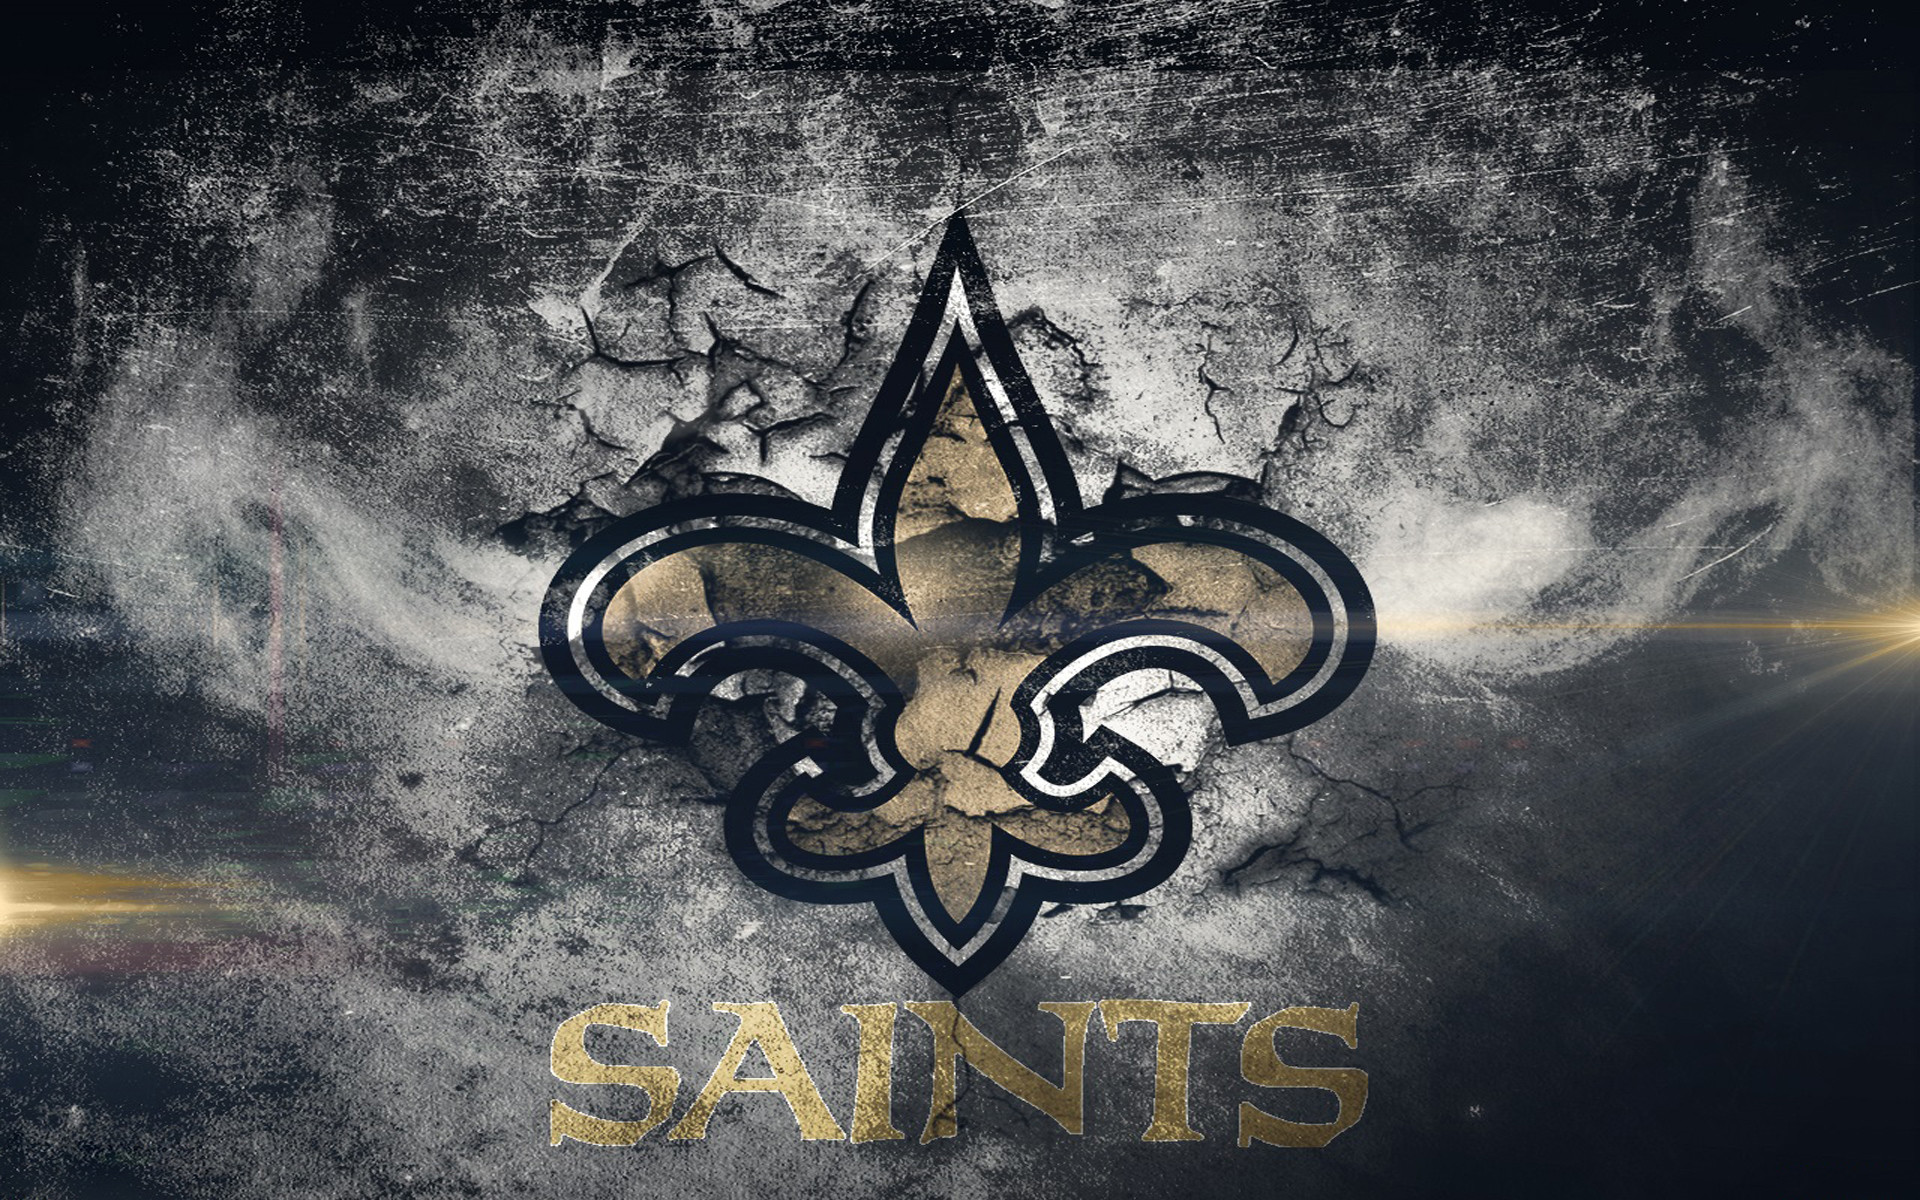 1920x1200 Download Fullsize Image Â· New Orleans Saints wallpaper HD ...